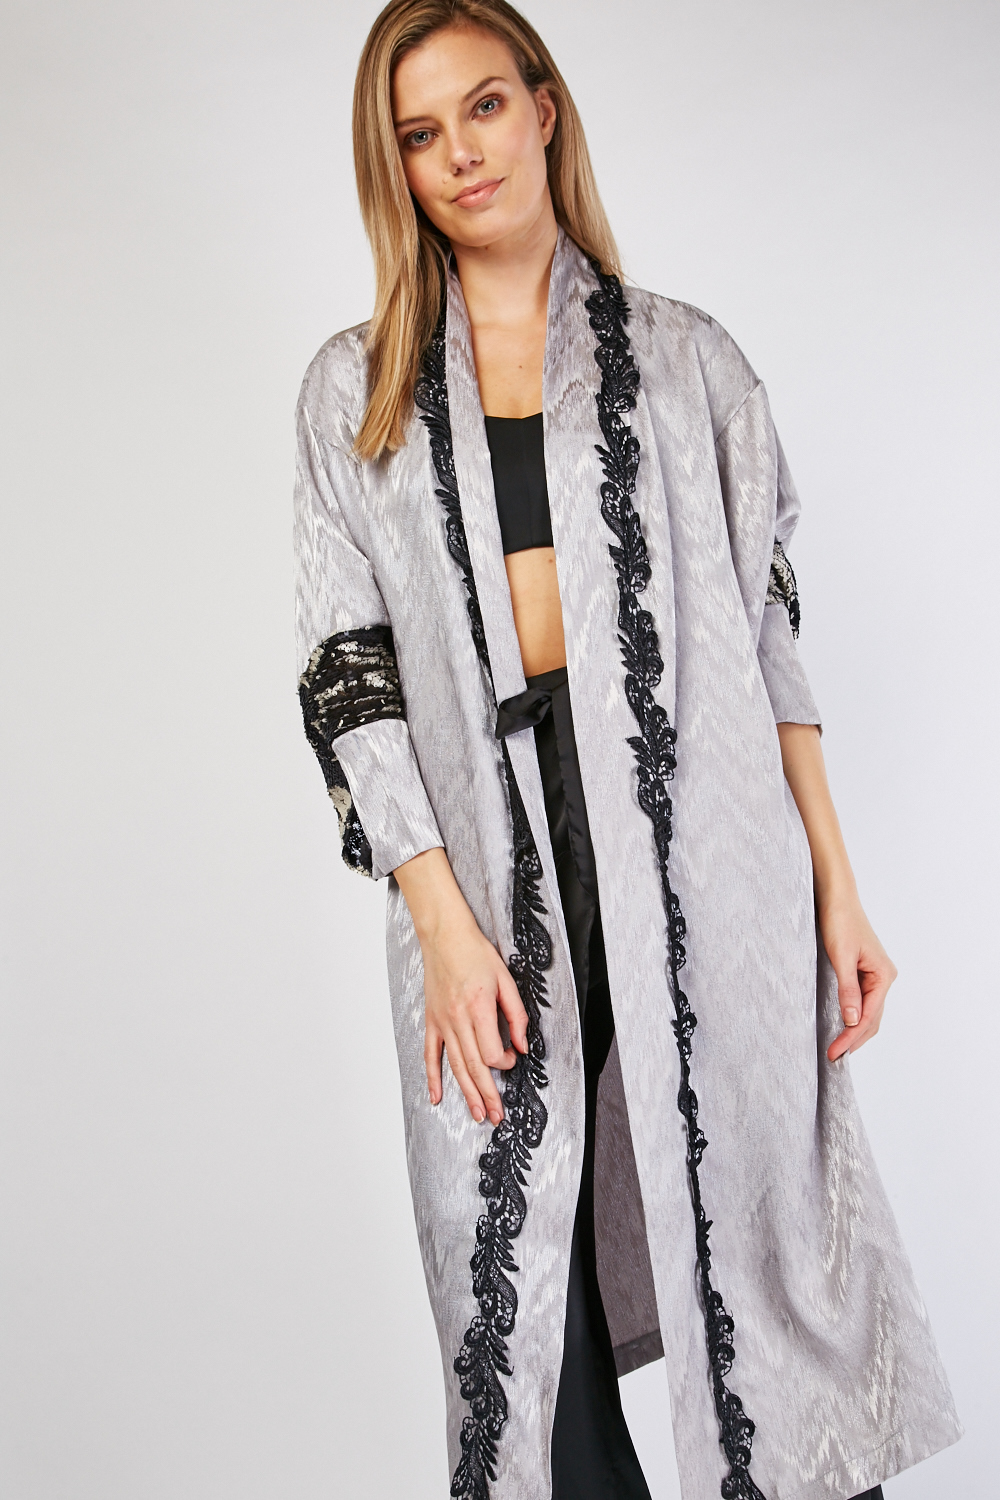 Sequin Sleeve Panel Long Line Kimono - Just $6